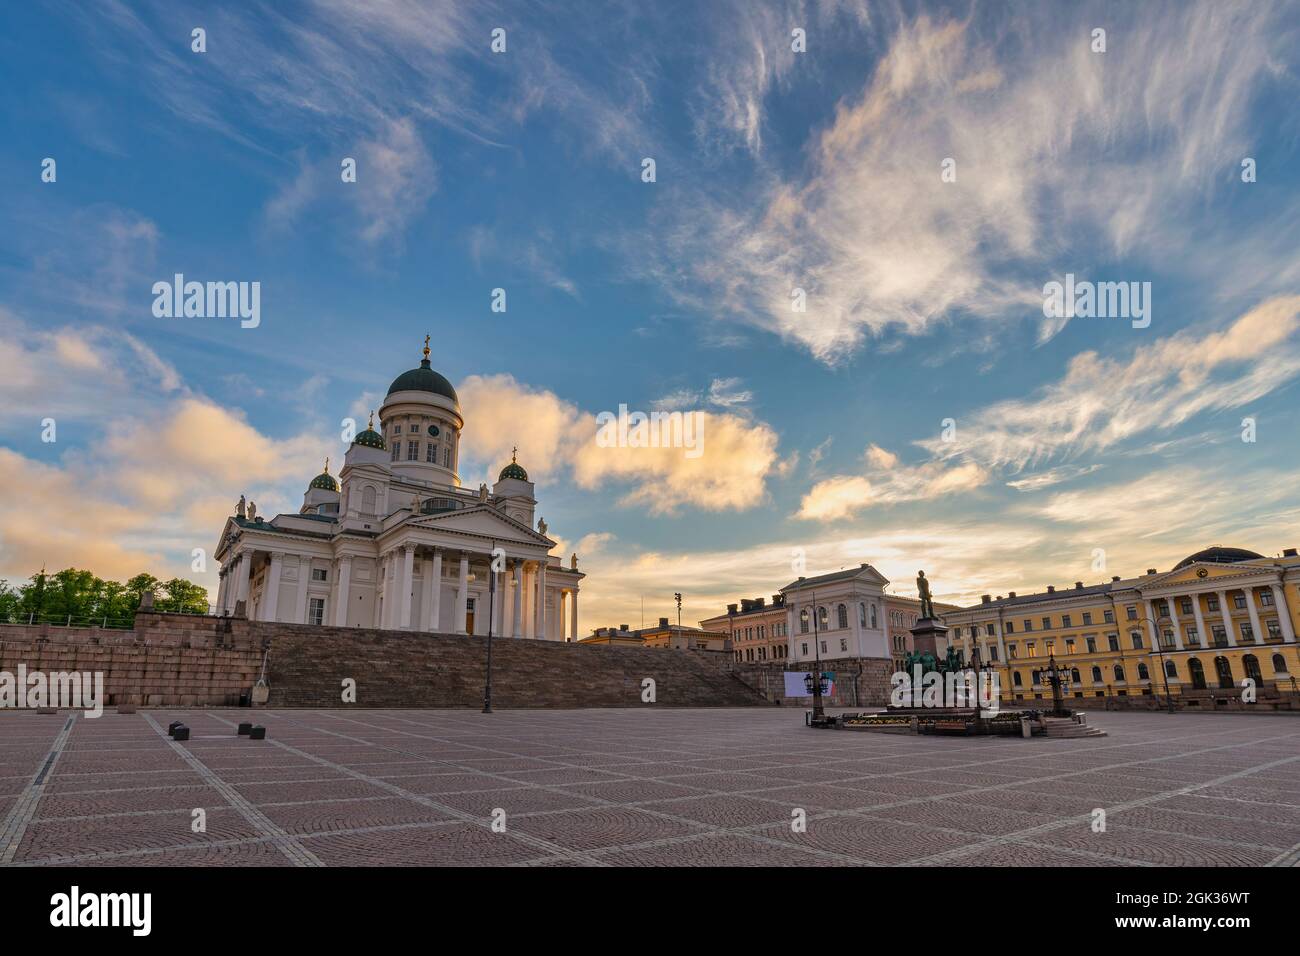 Helsinki Finland, sunrise city skyline at Helsinki Cathedral and Senate Square Stock Photo